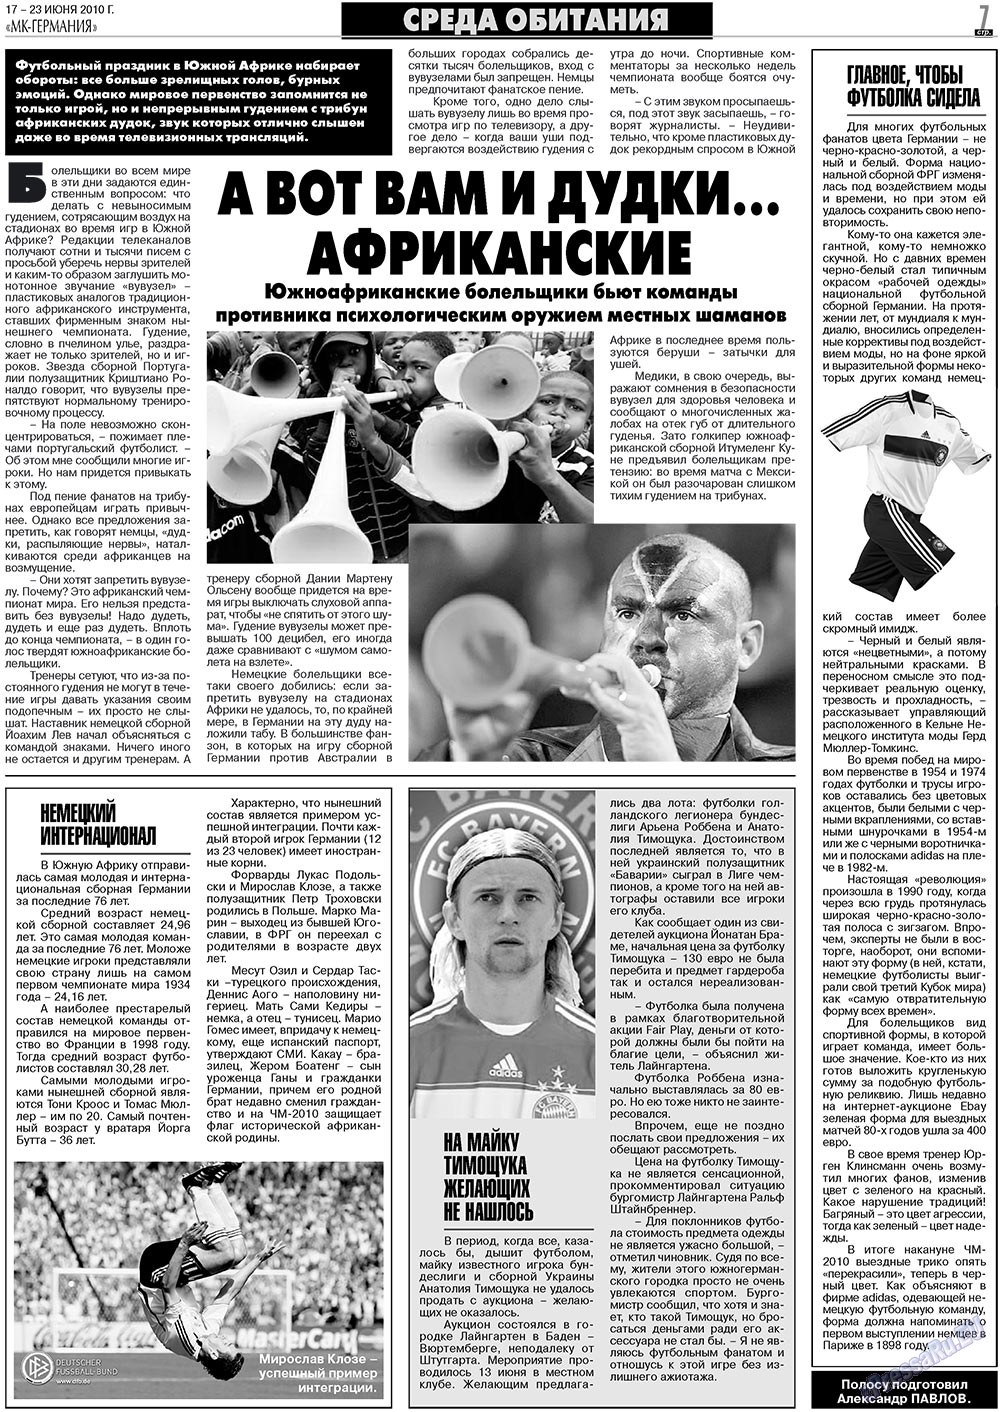 МК-Германия, газета. 2010 №25 стр.7